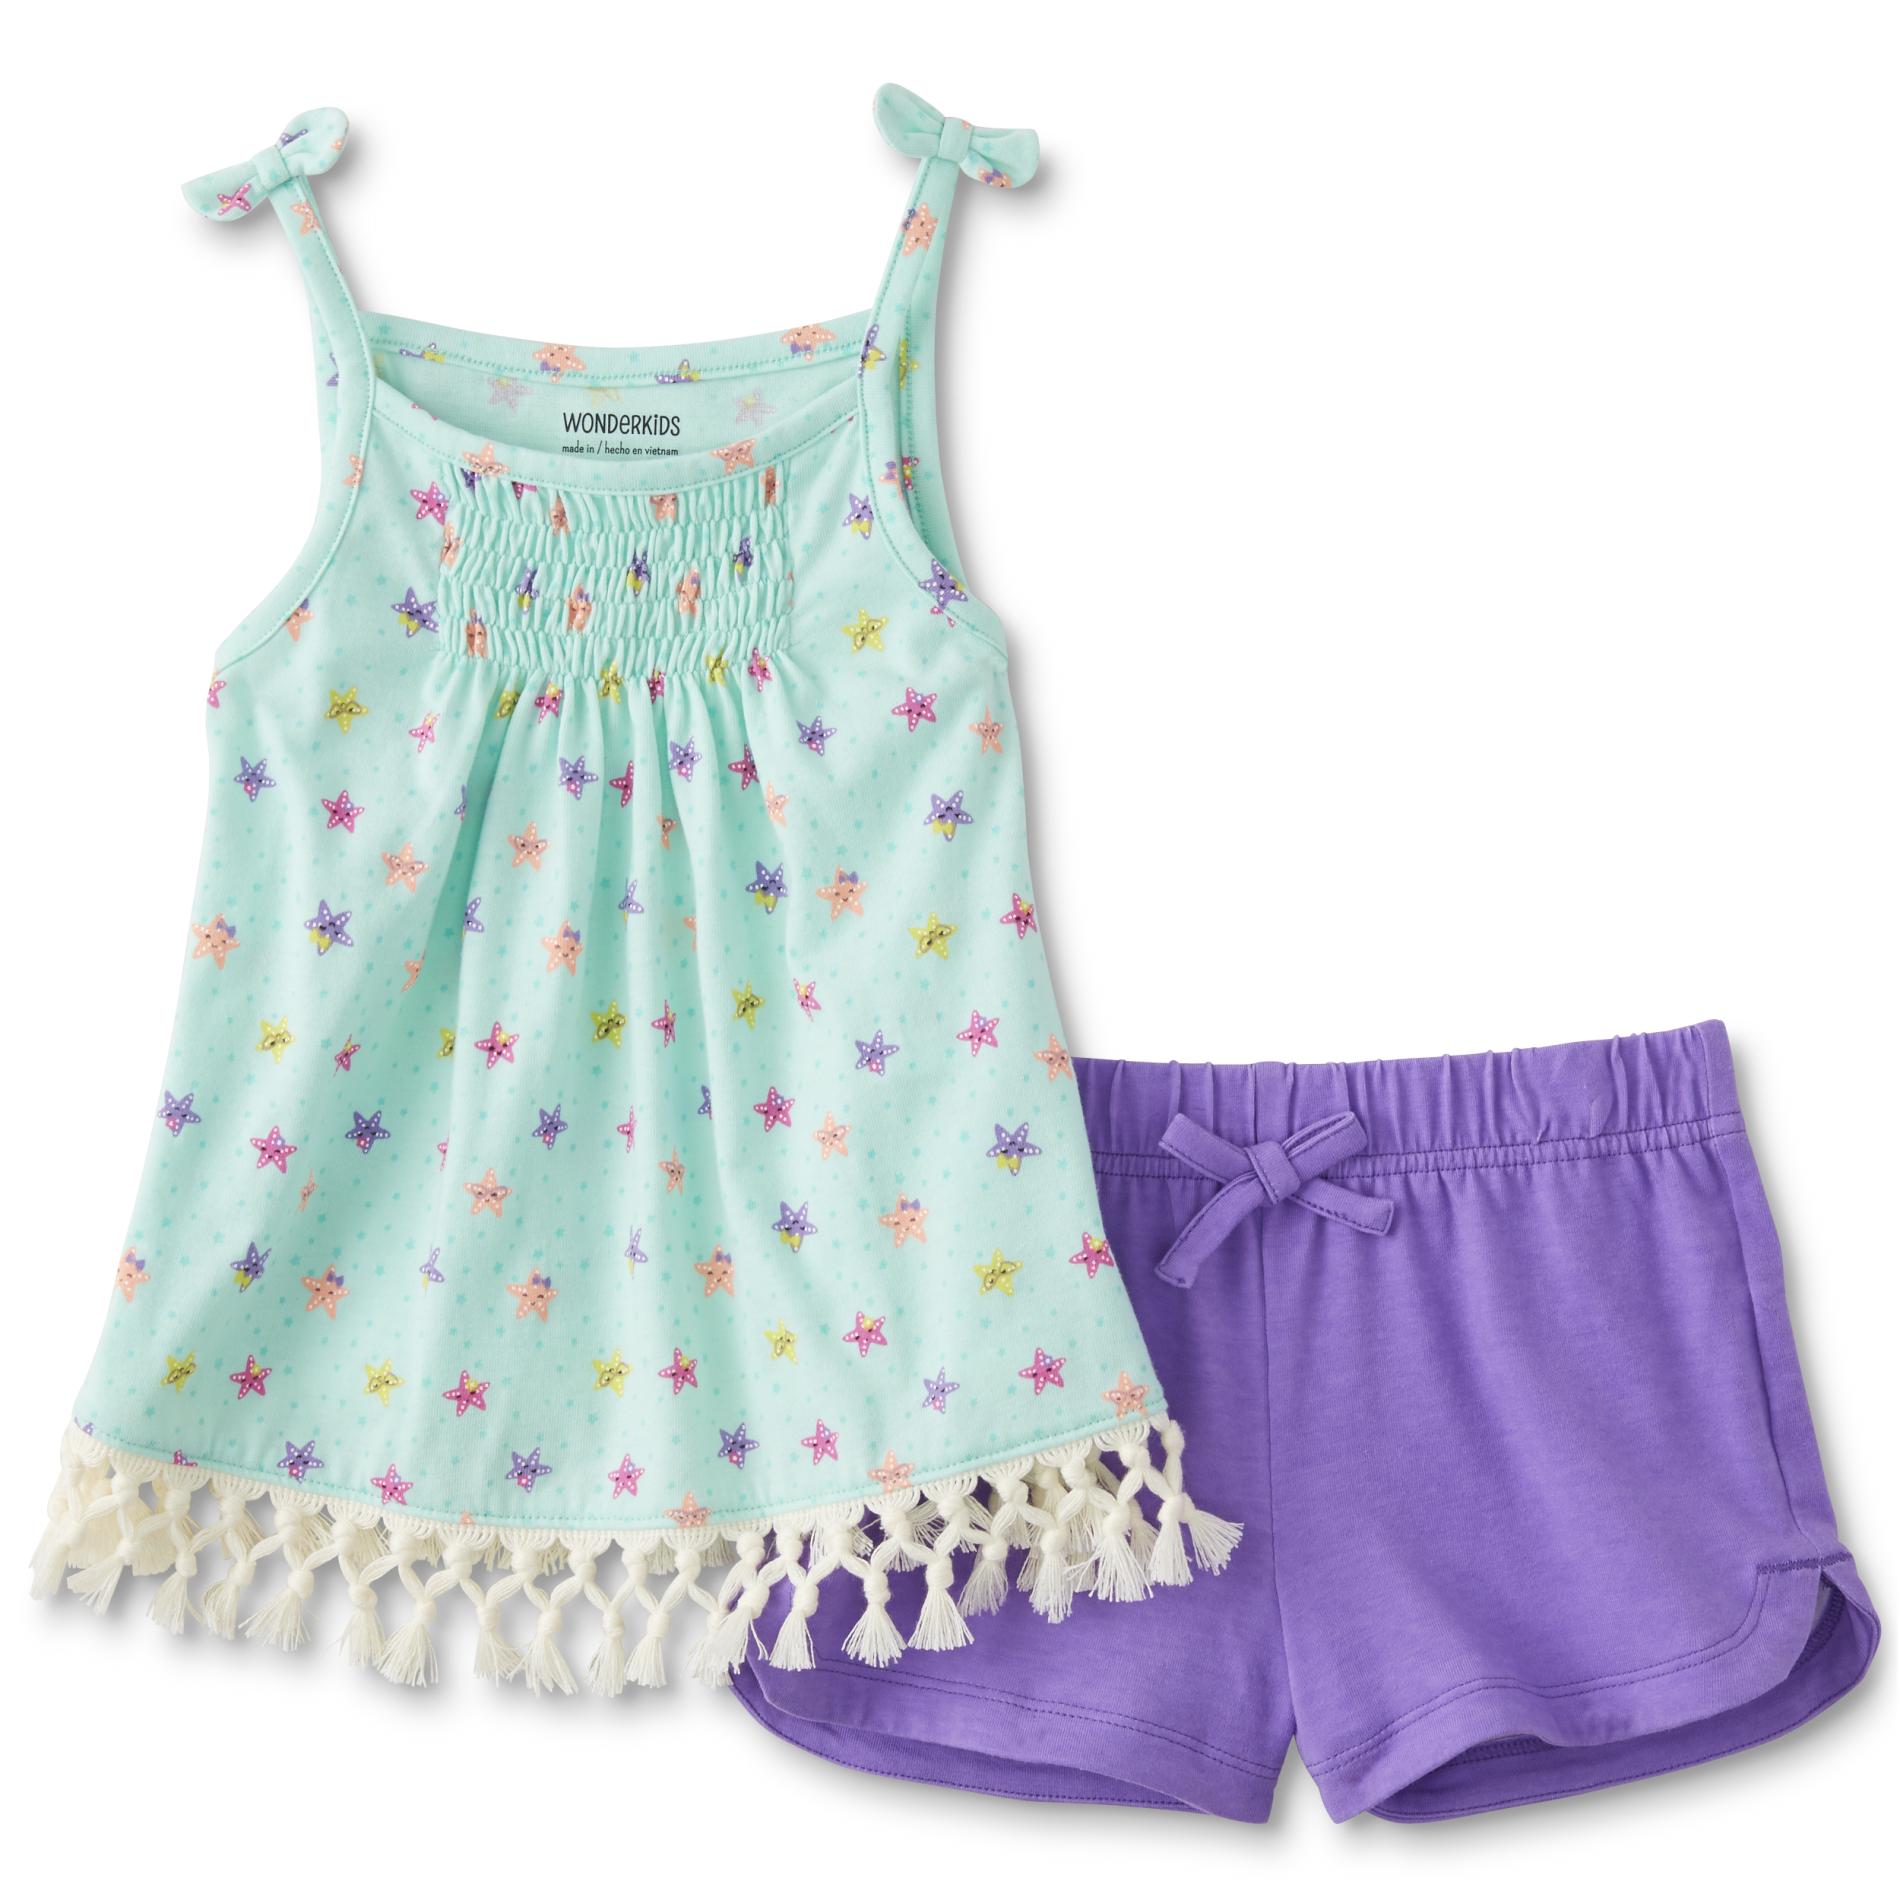 WonderKids Infant & Toddler Girls' Embellished Tank Top & Shorts - Starfish